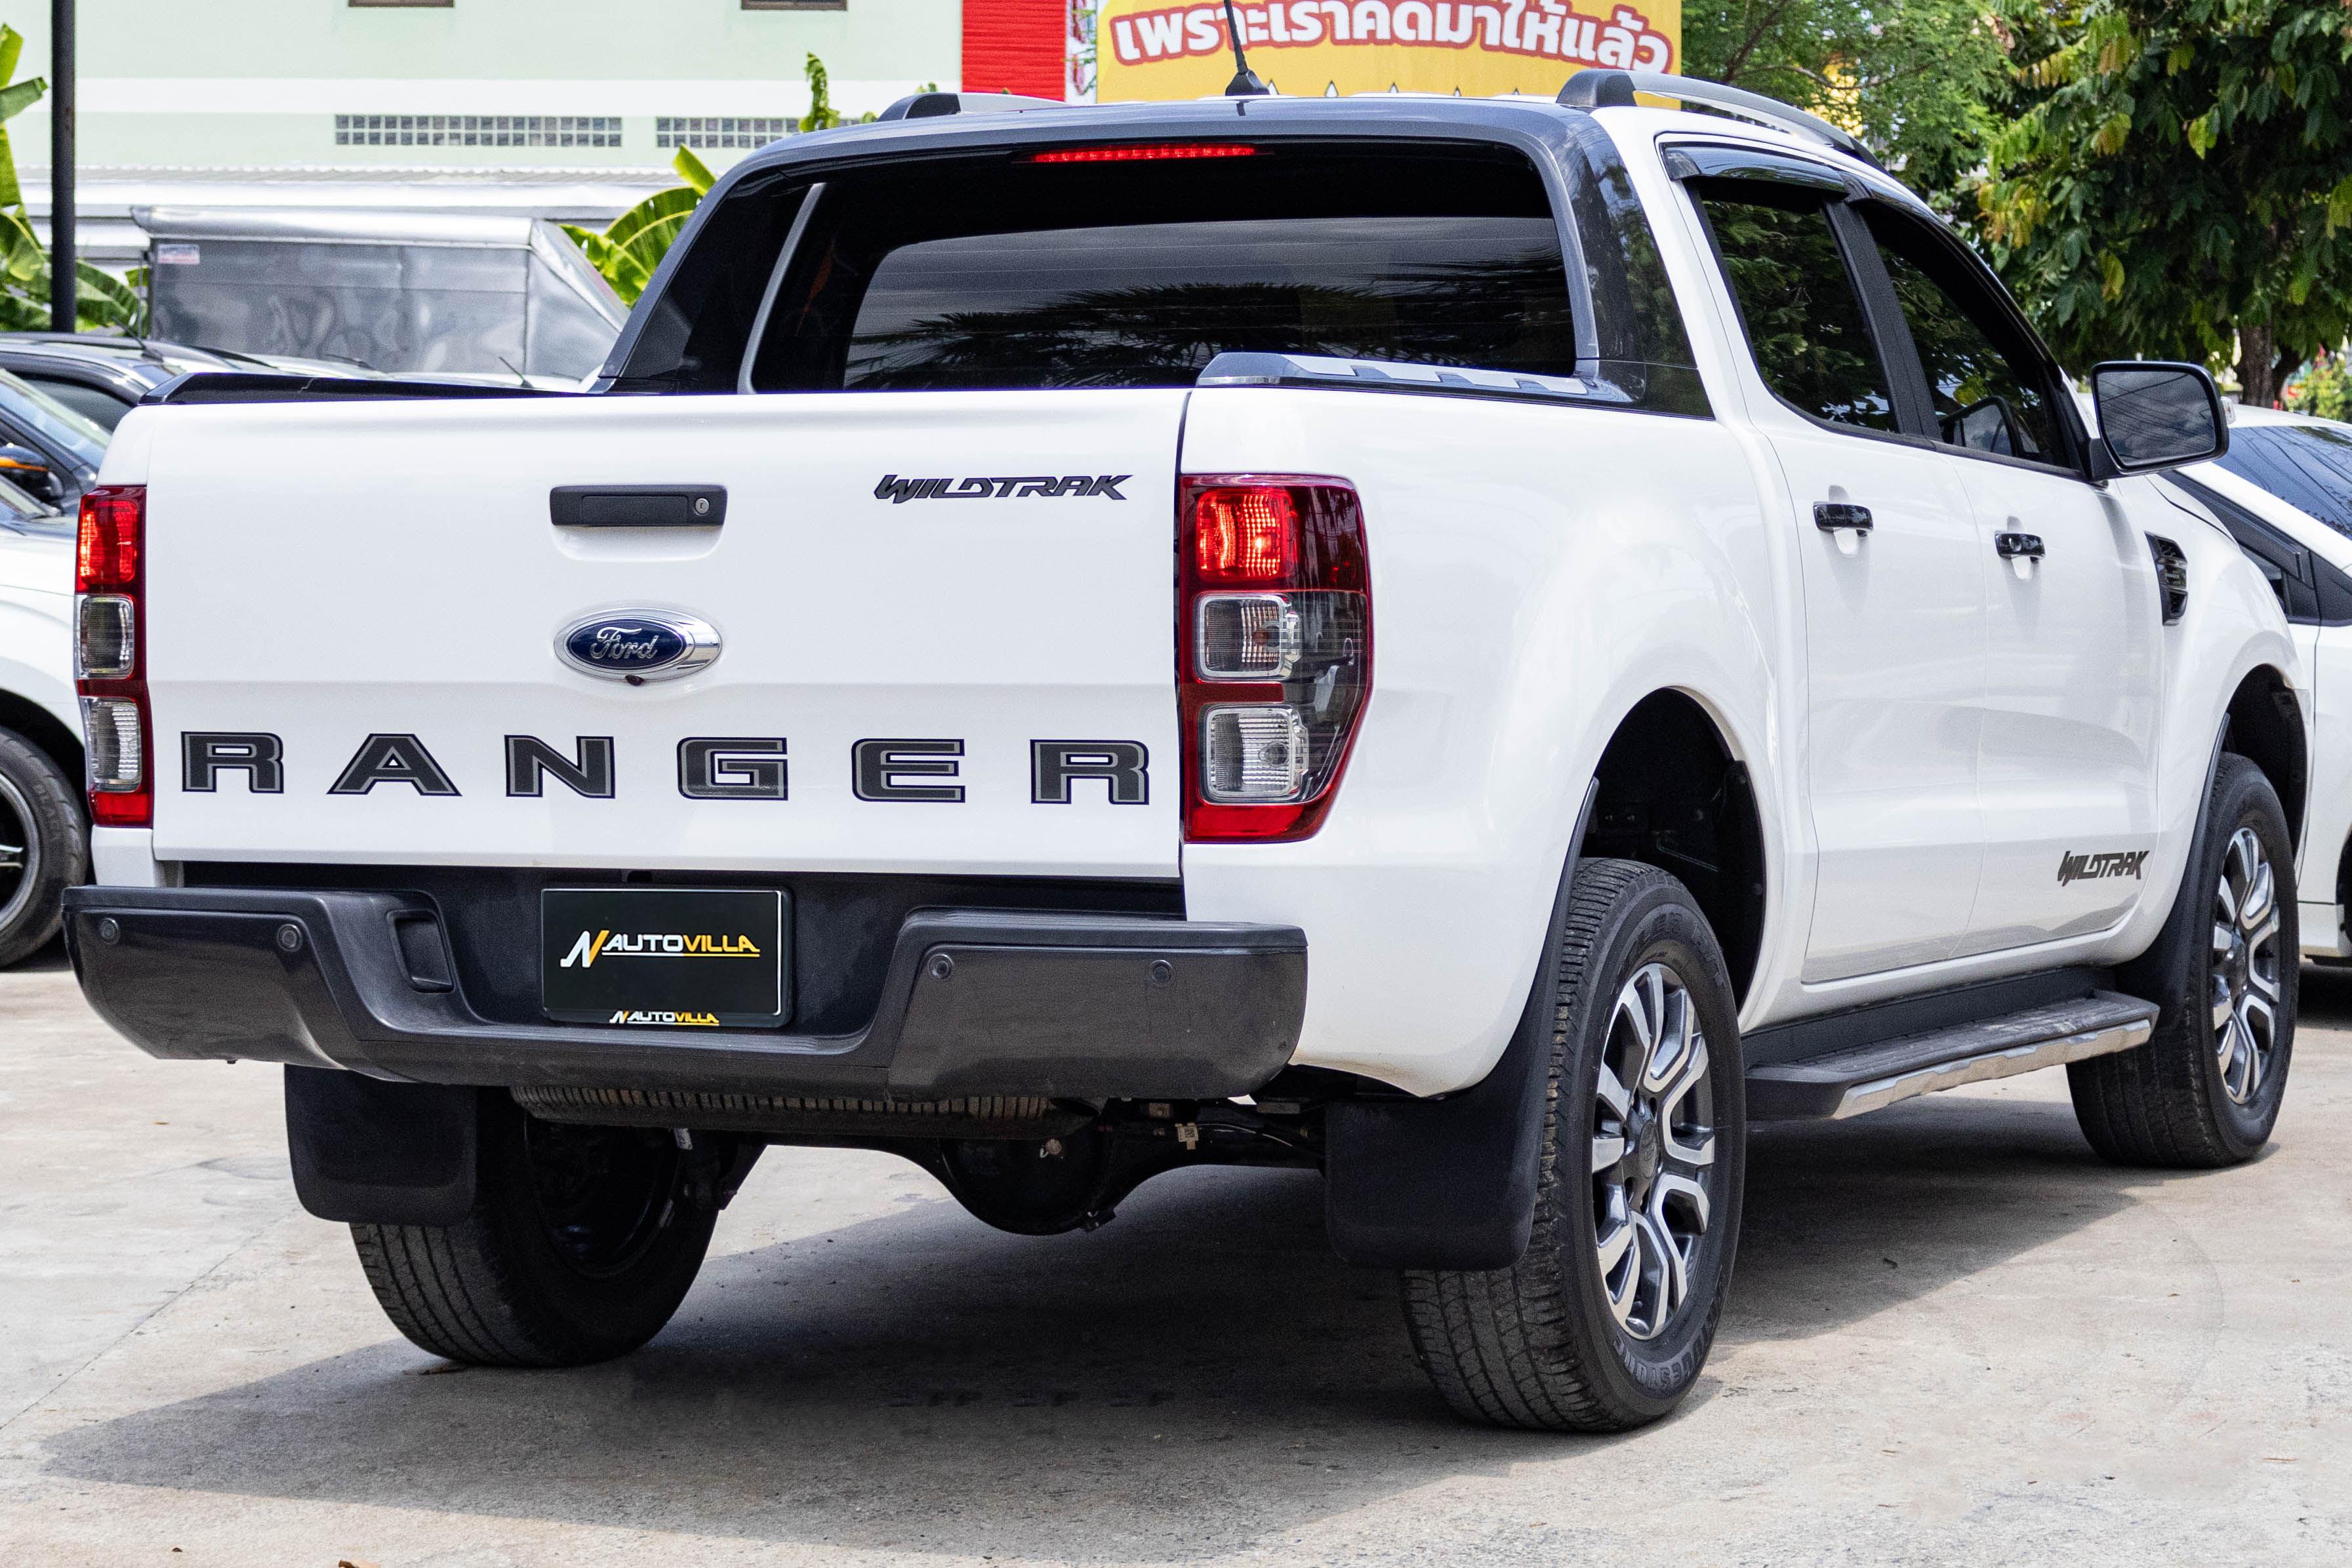 Ford Ranger Doublecab HiRider 2.0 Wildtrak A/T 2020 *SK1954*